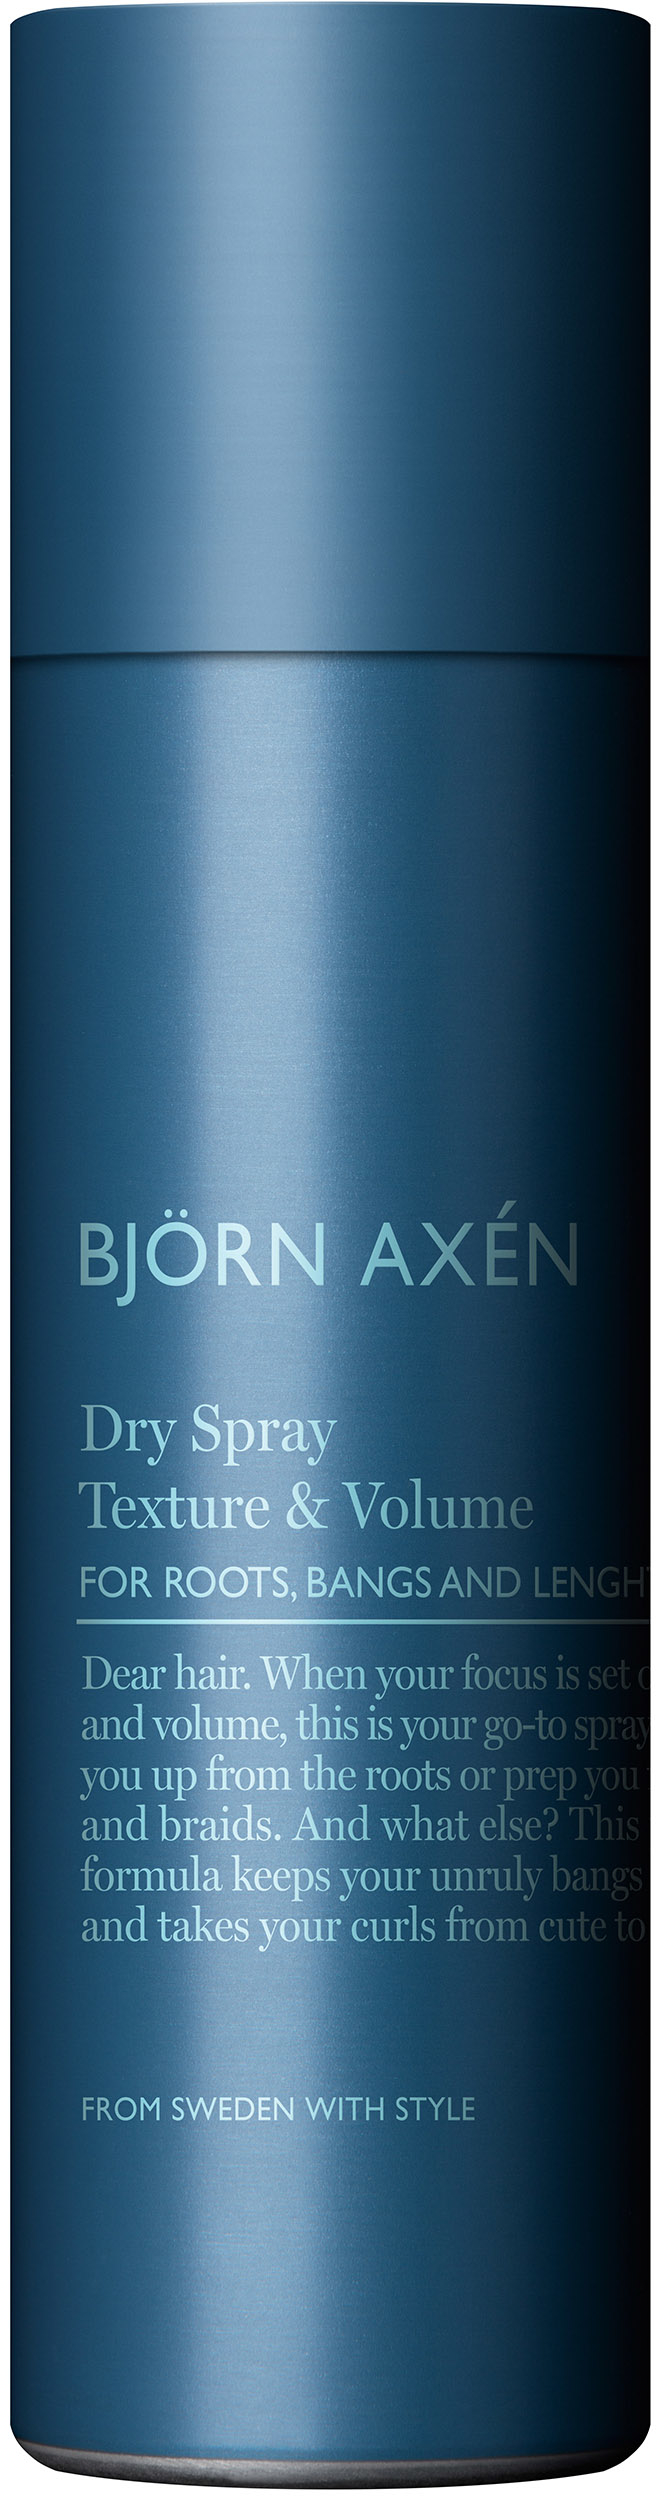 Björn Axén Texture & Volume Dry Spray 200 ml